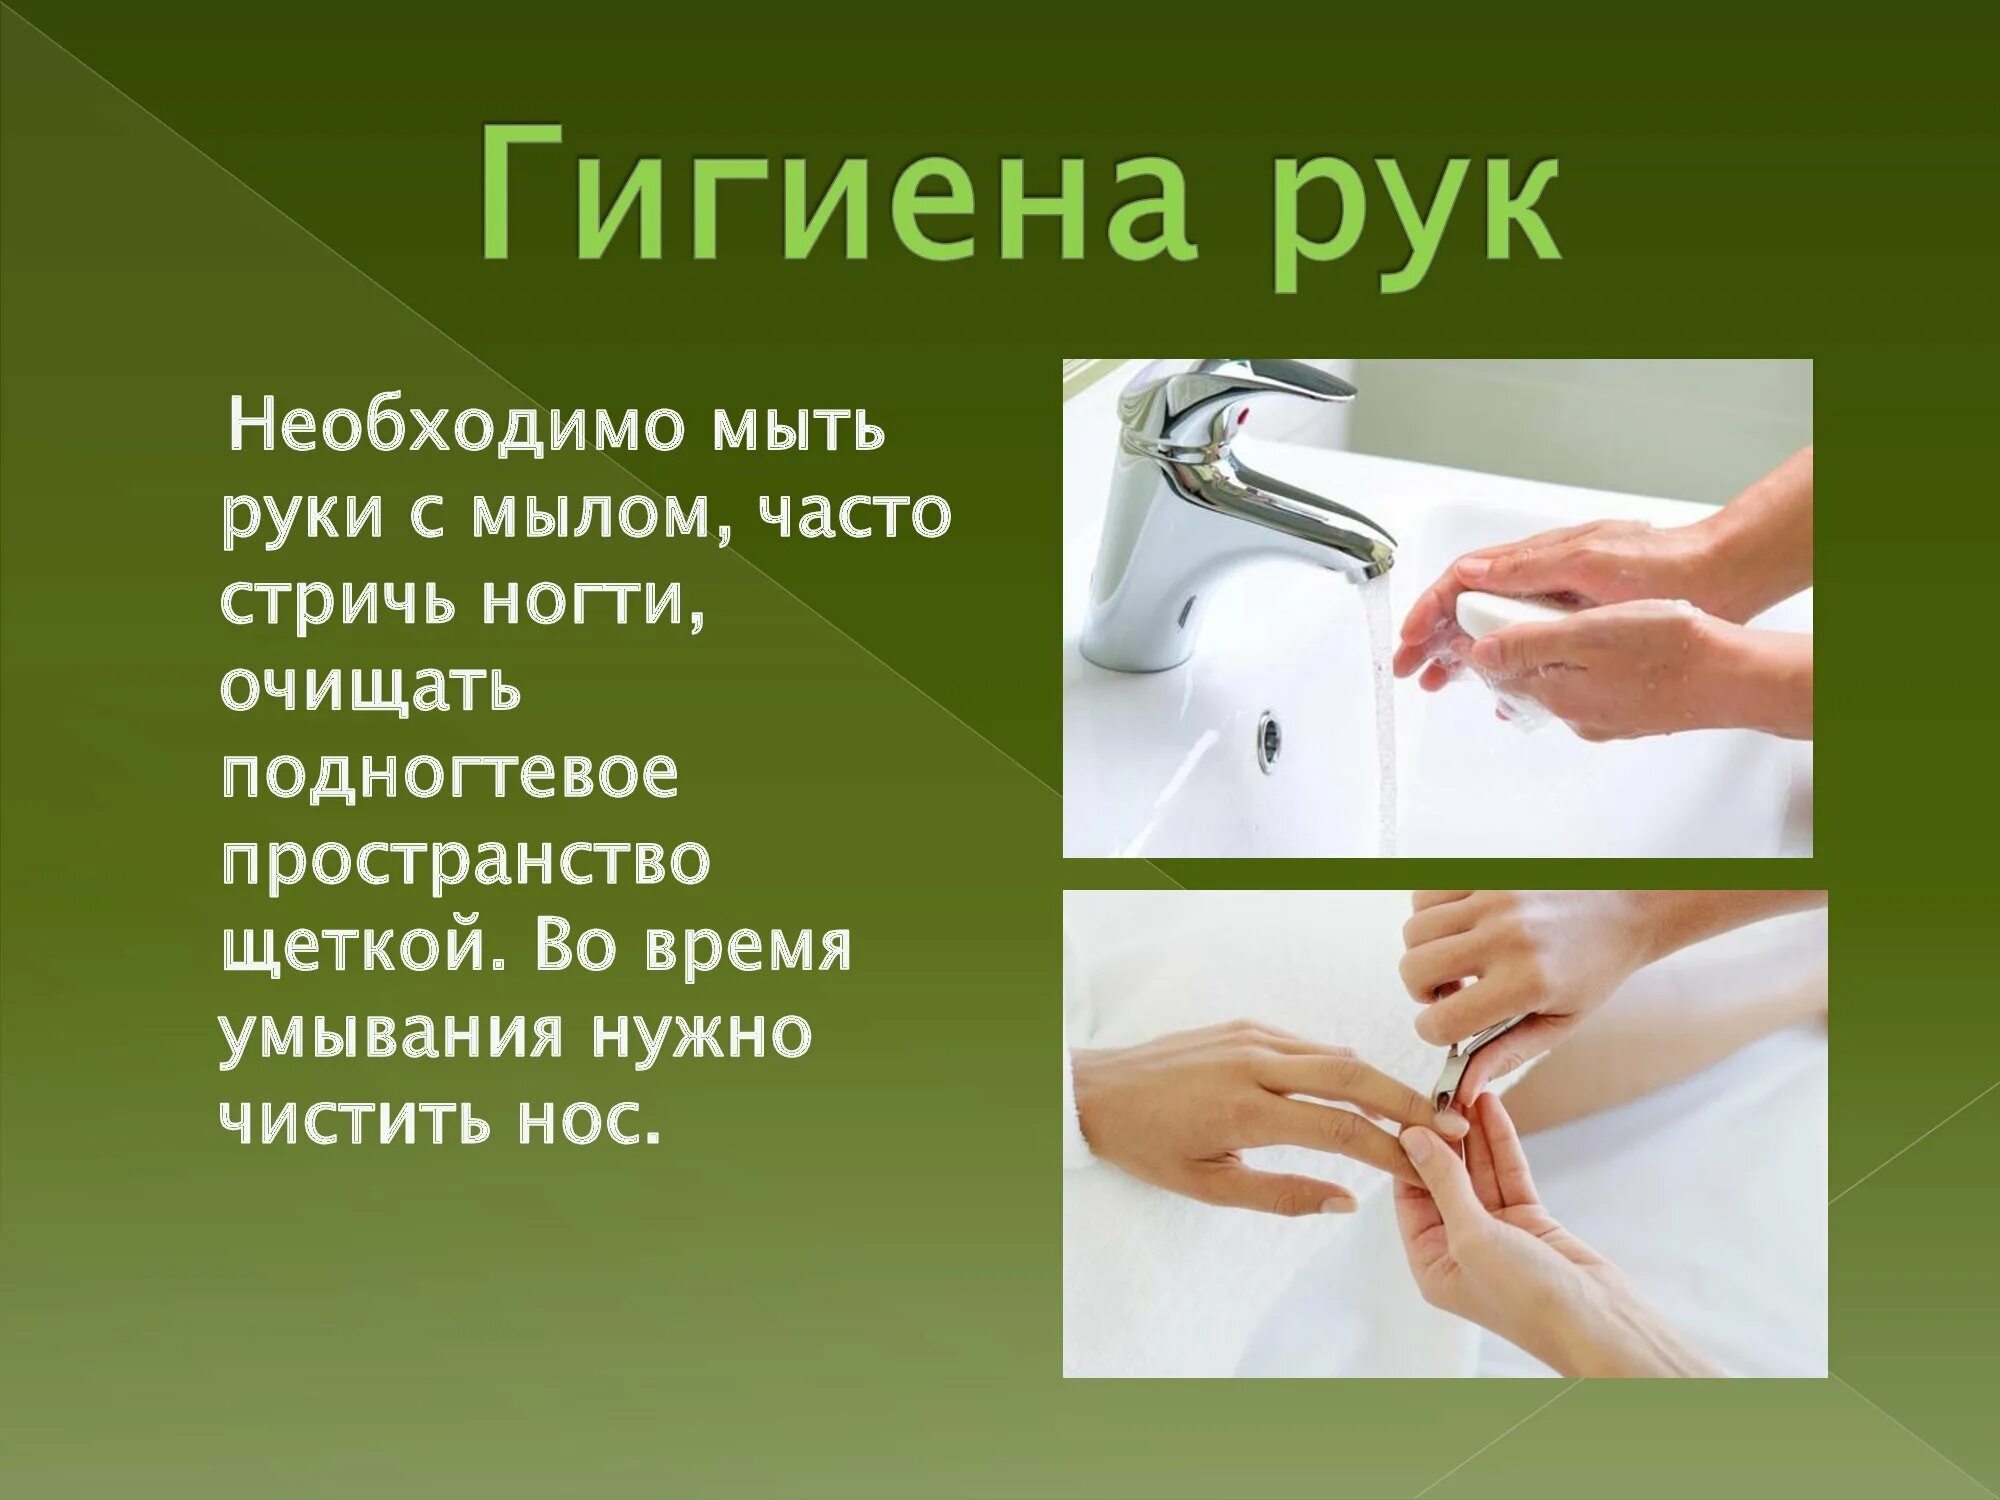 Гигиена рук. Гигиена мытья рук. Личная гигиена мытье рук. Гигиена мытья рук для детей. Видеоуроки моем руки